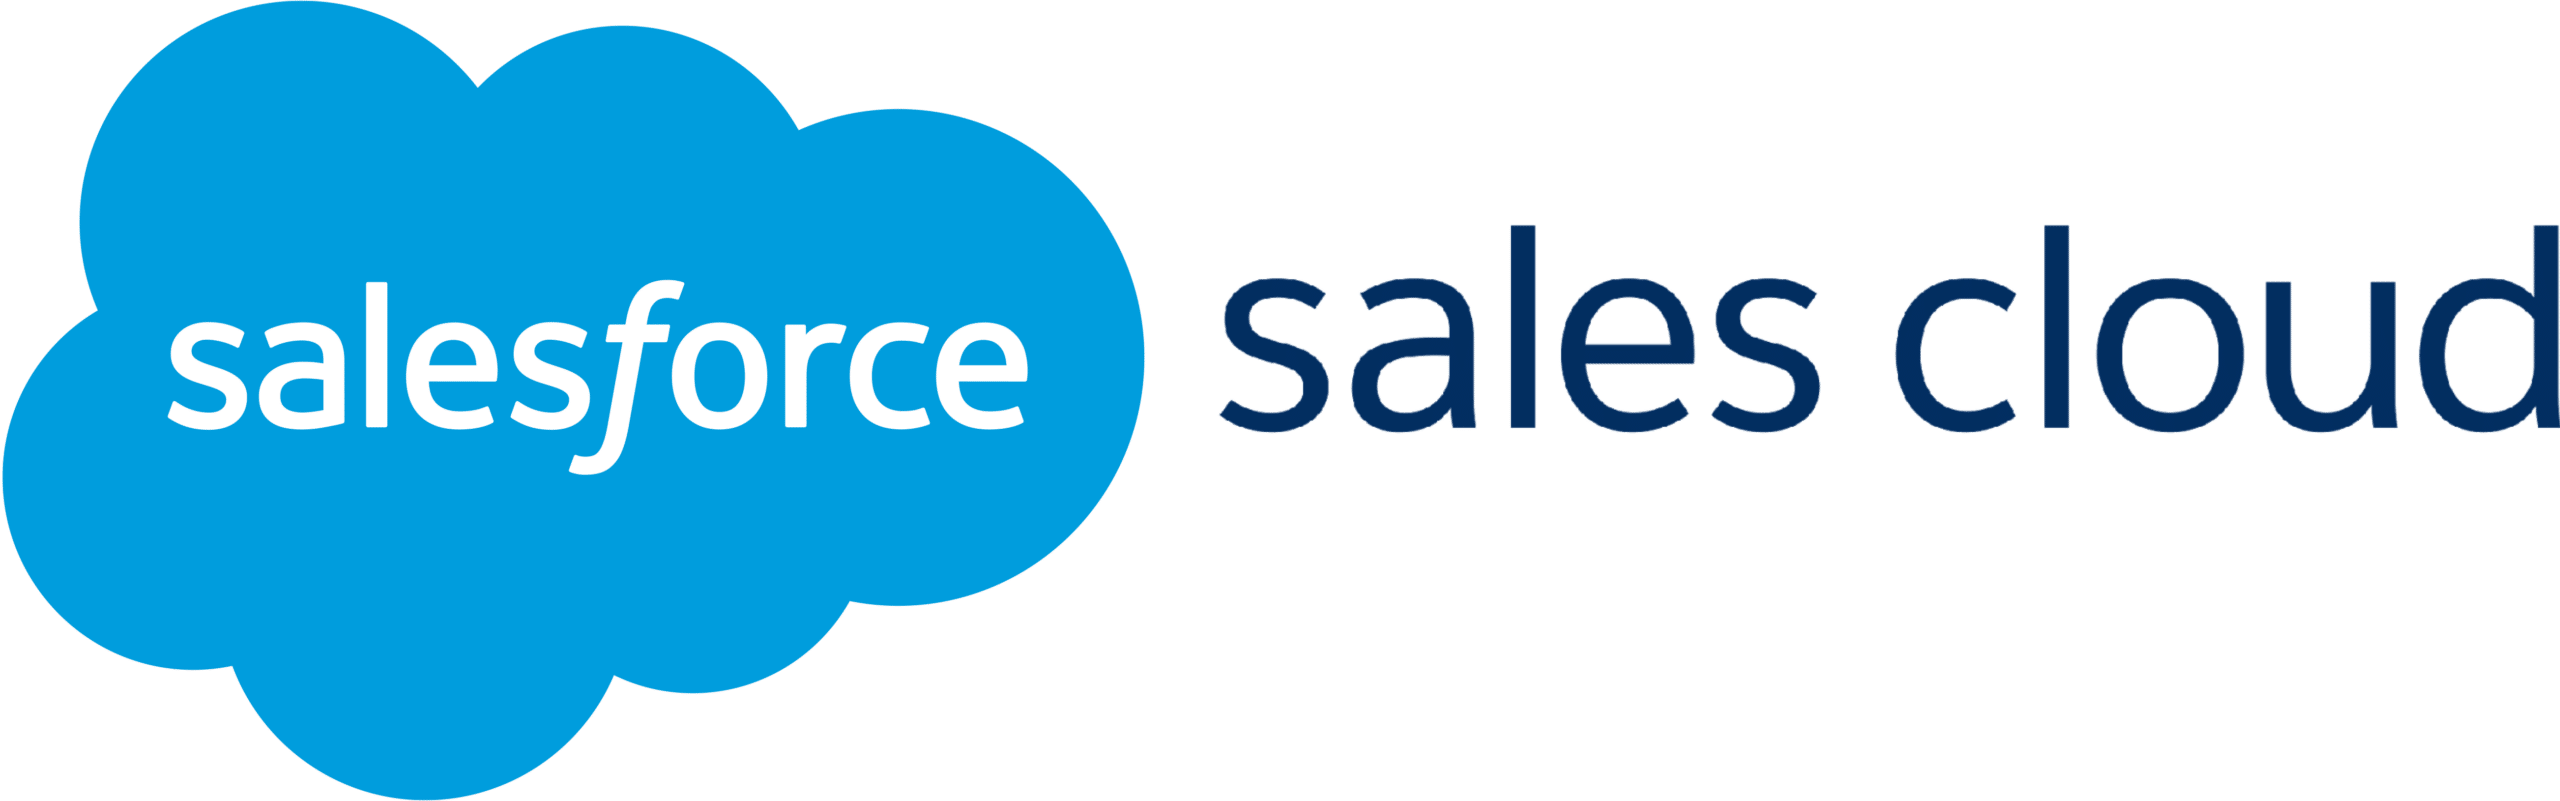 Salesforce sales cloud logo